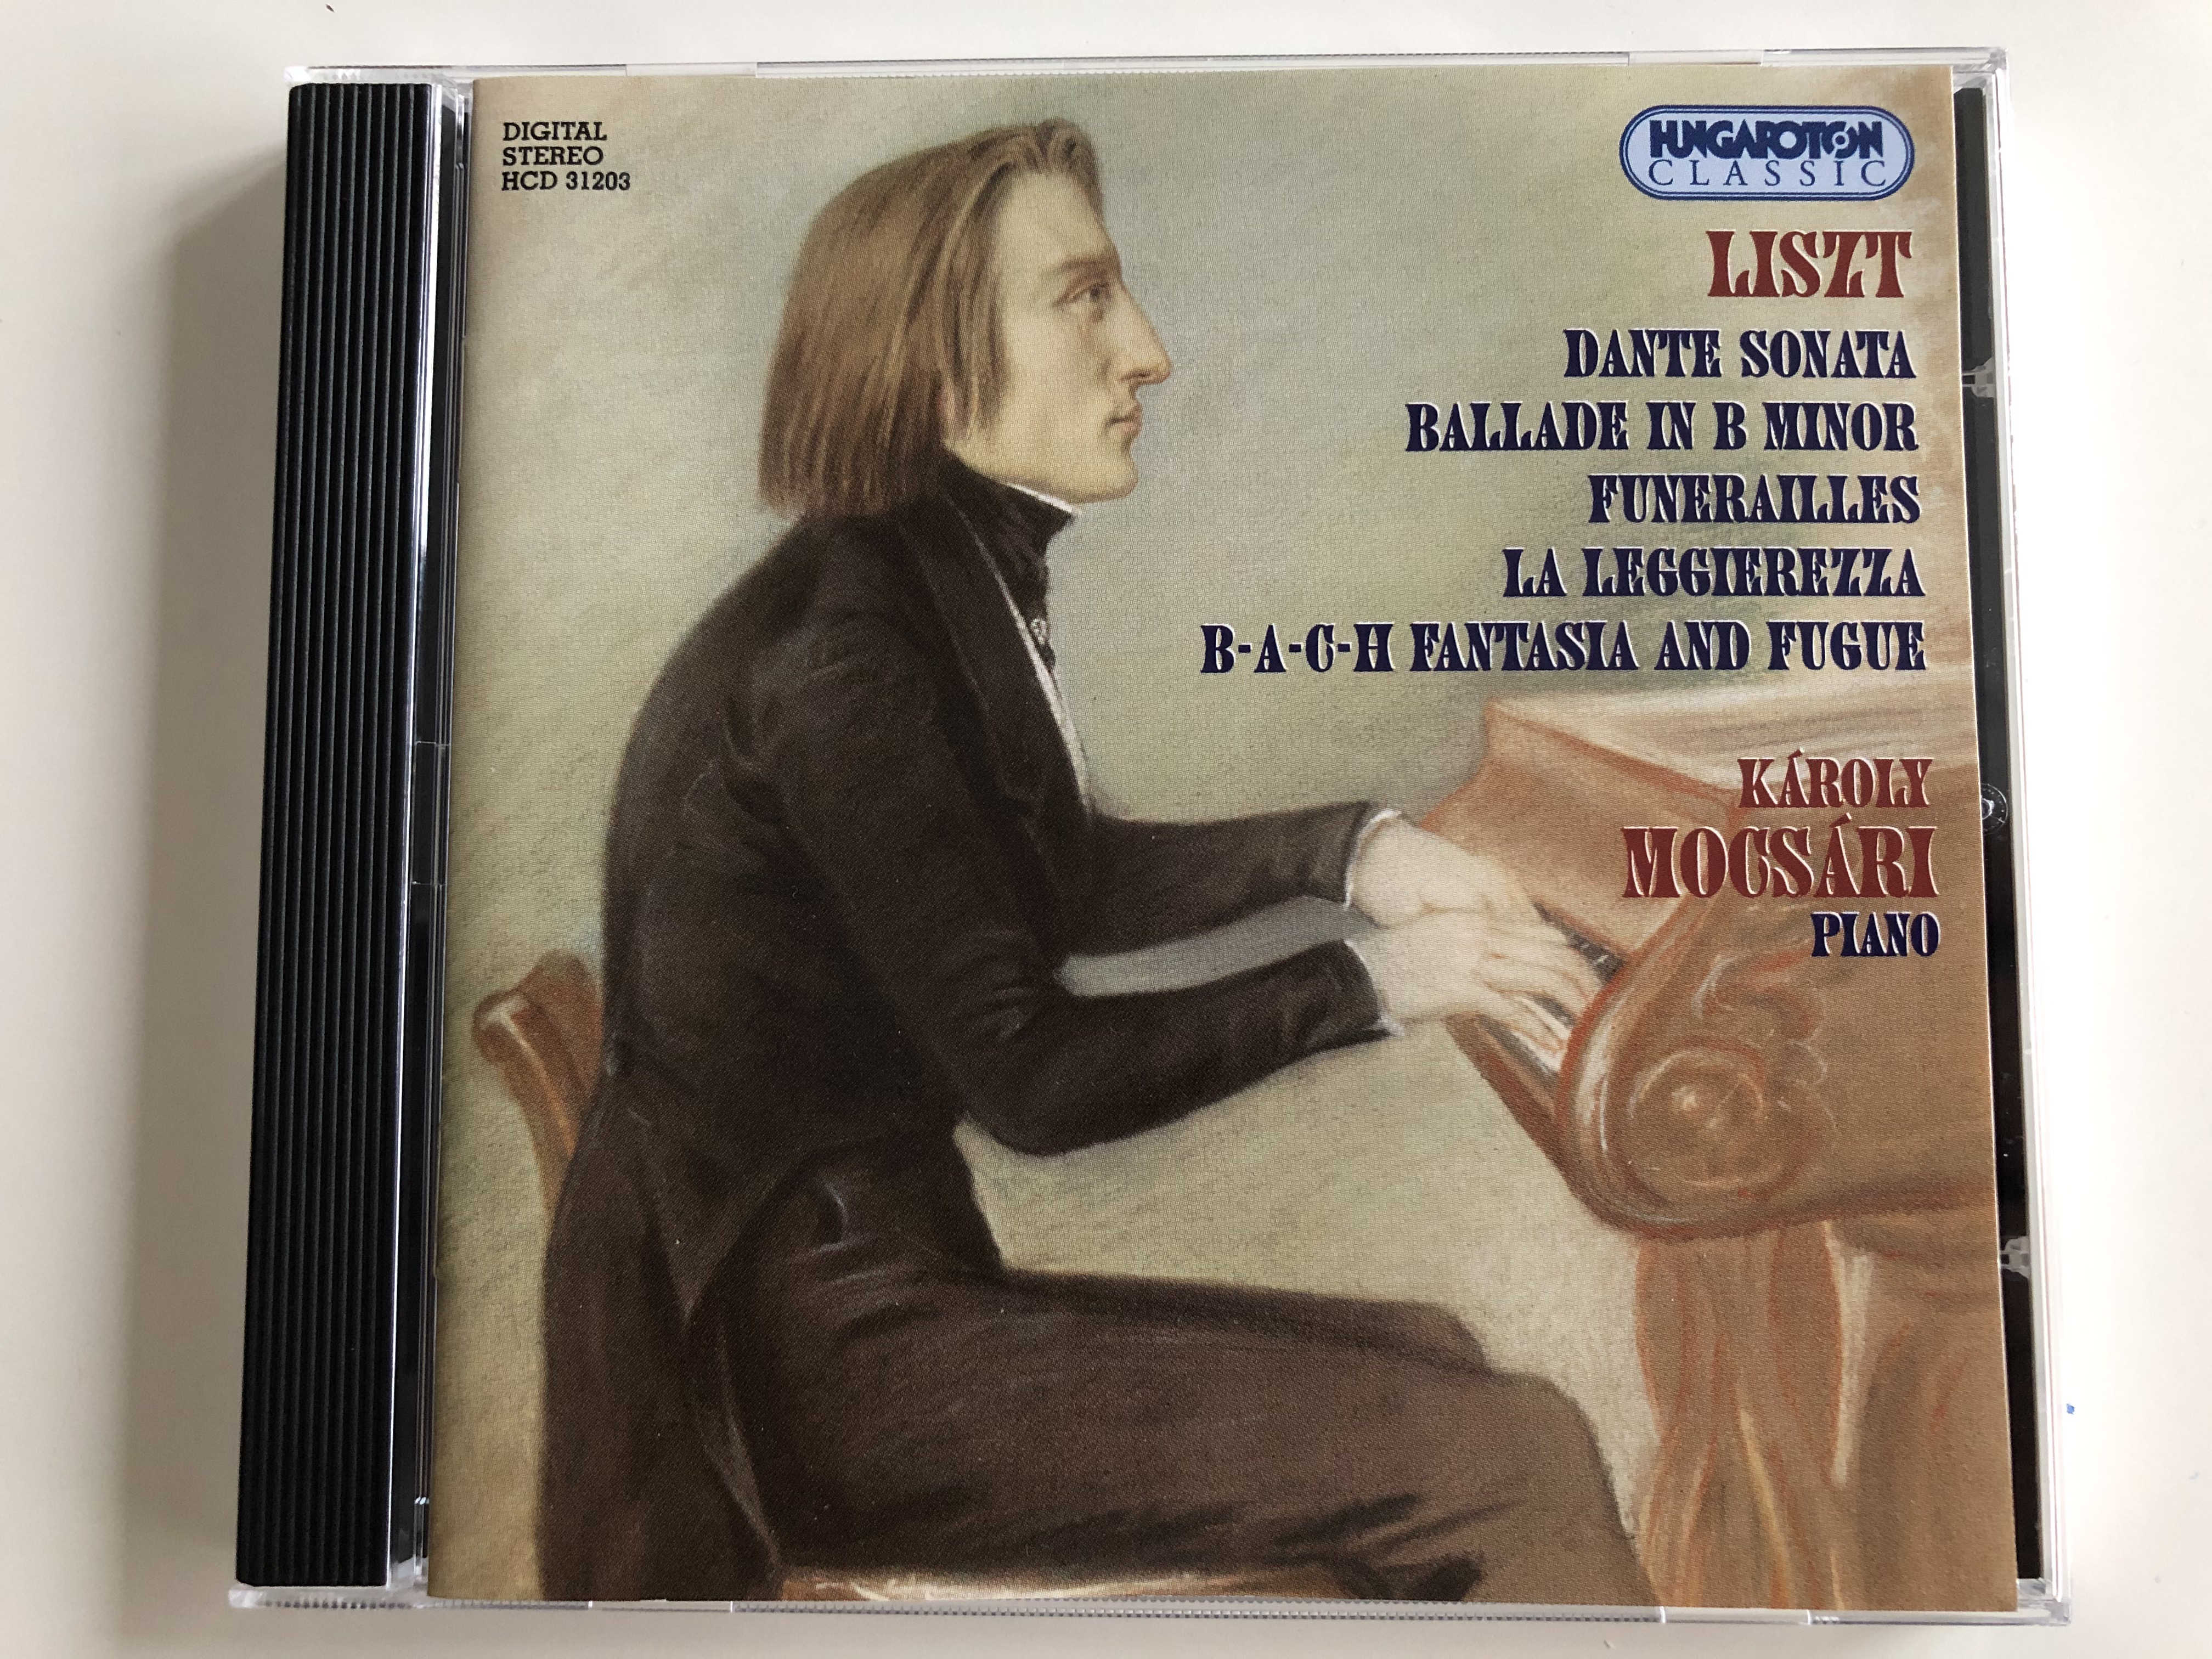 liszt-dante-sonata-ballade-in-b-minor-fun-railles-la-leggierezza-b-a-c-h-fantasia-and-fugue-karoly-mocs-ri-piano-hungaroton-classic-audio-cd-1995-stereo-hcd-31203-1-.jpg